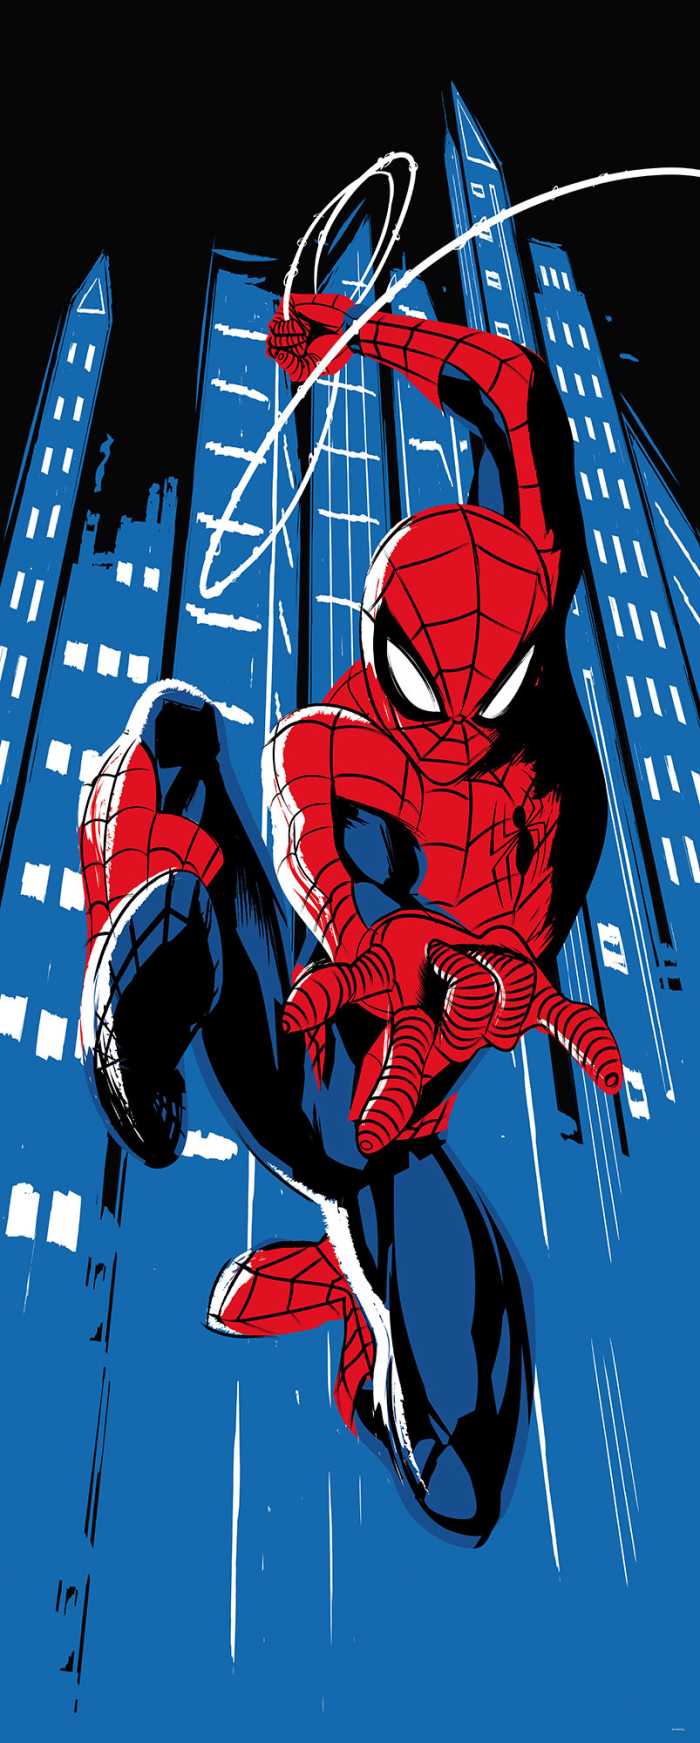 Poster XXL impression numérique Spider-Man Rooftop-Rockin